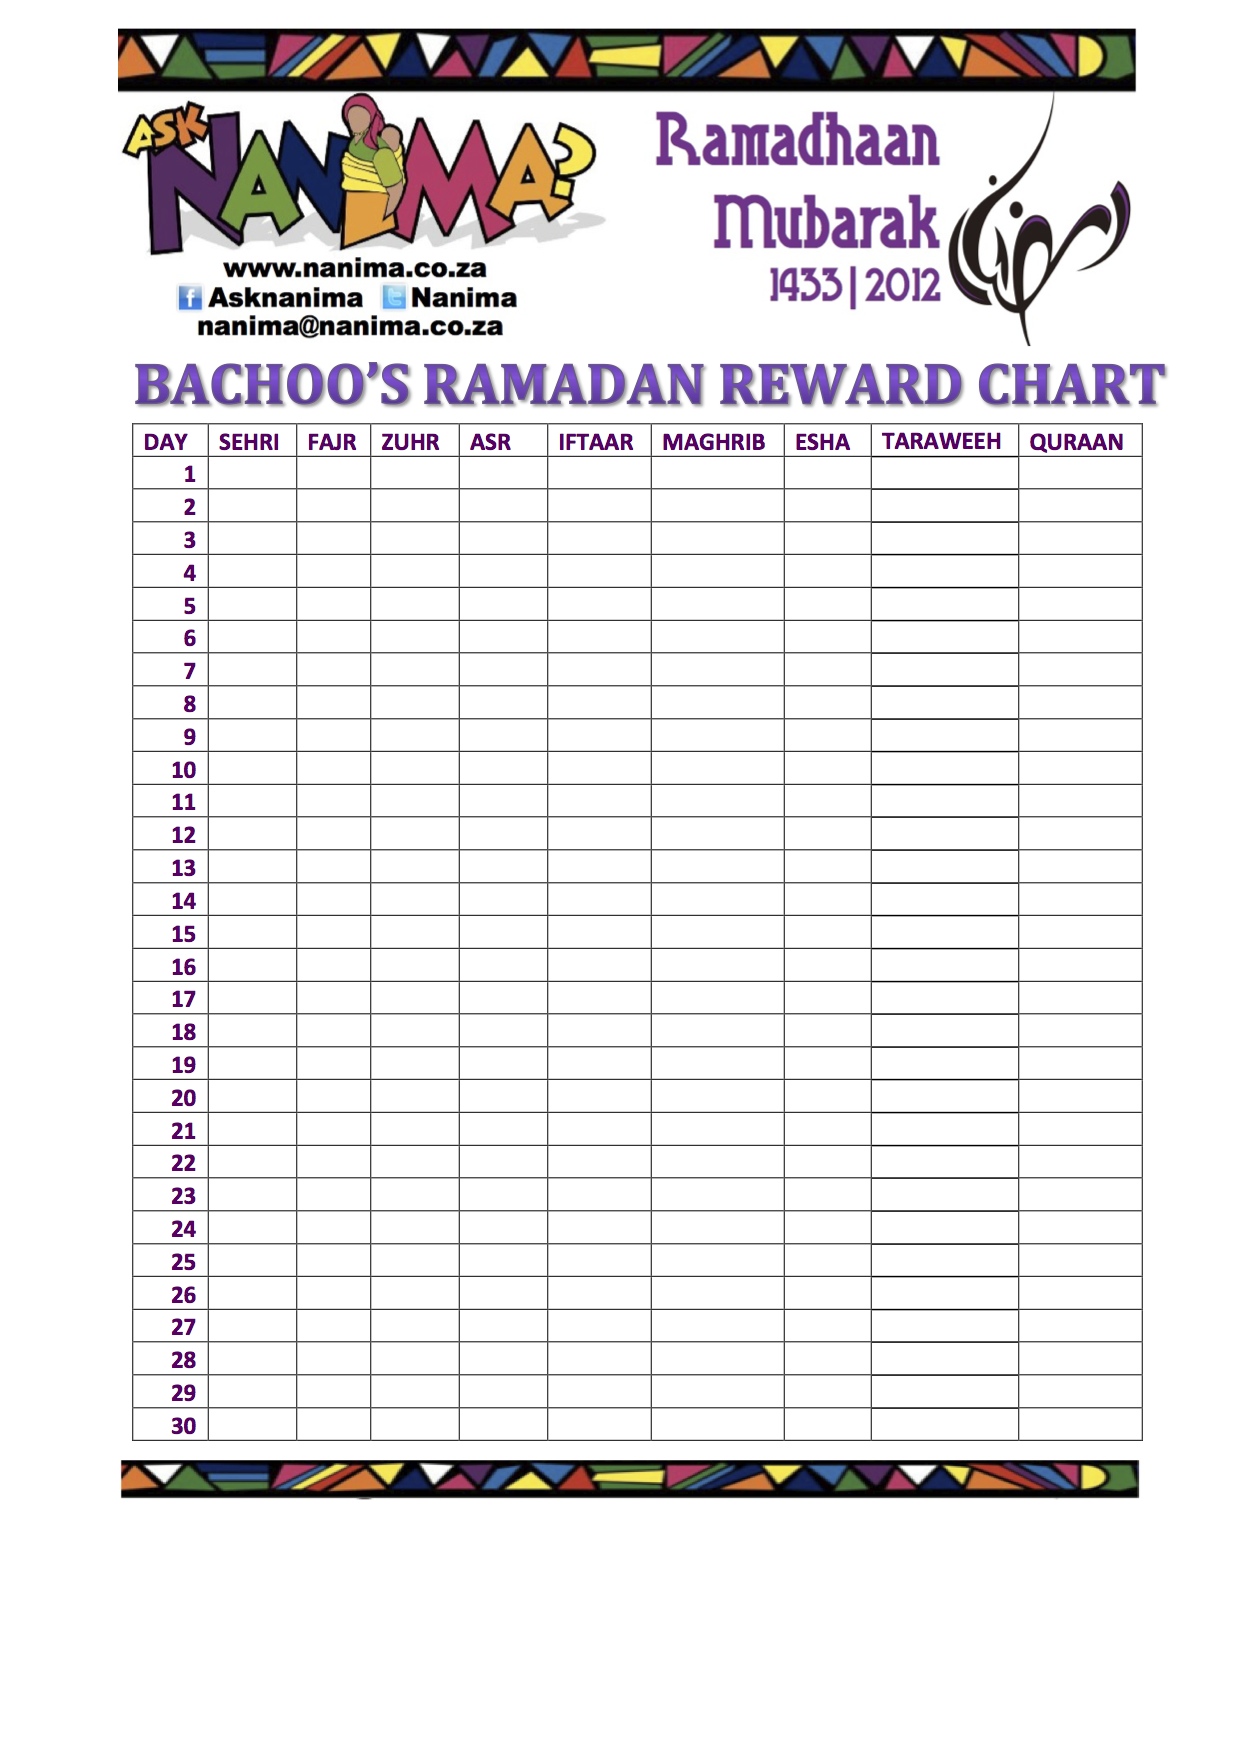 Bachoo’s Ramadan Reward Chart